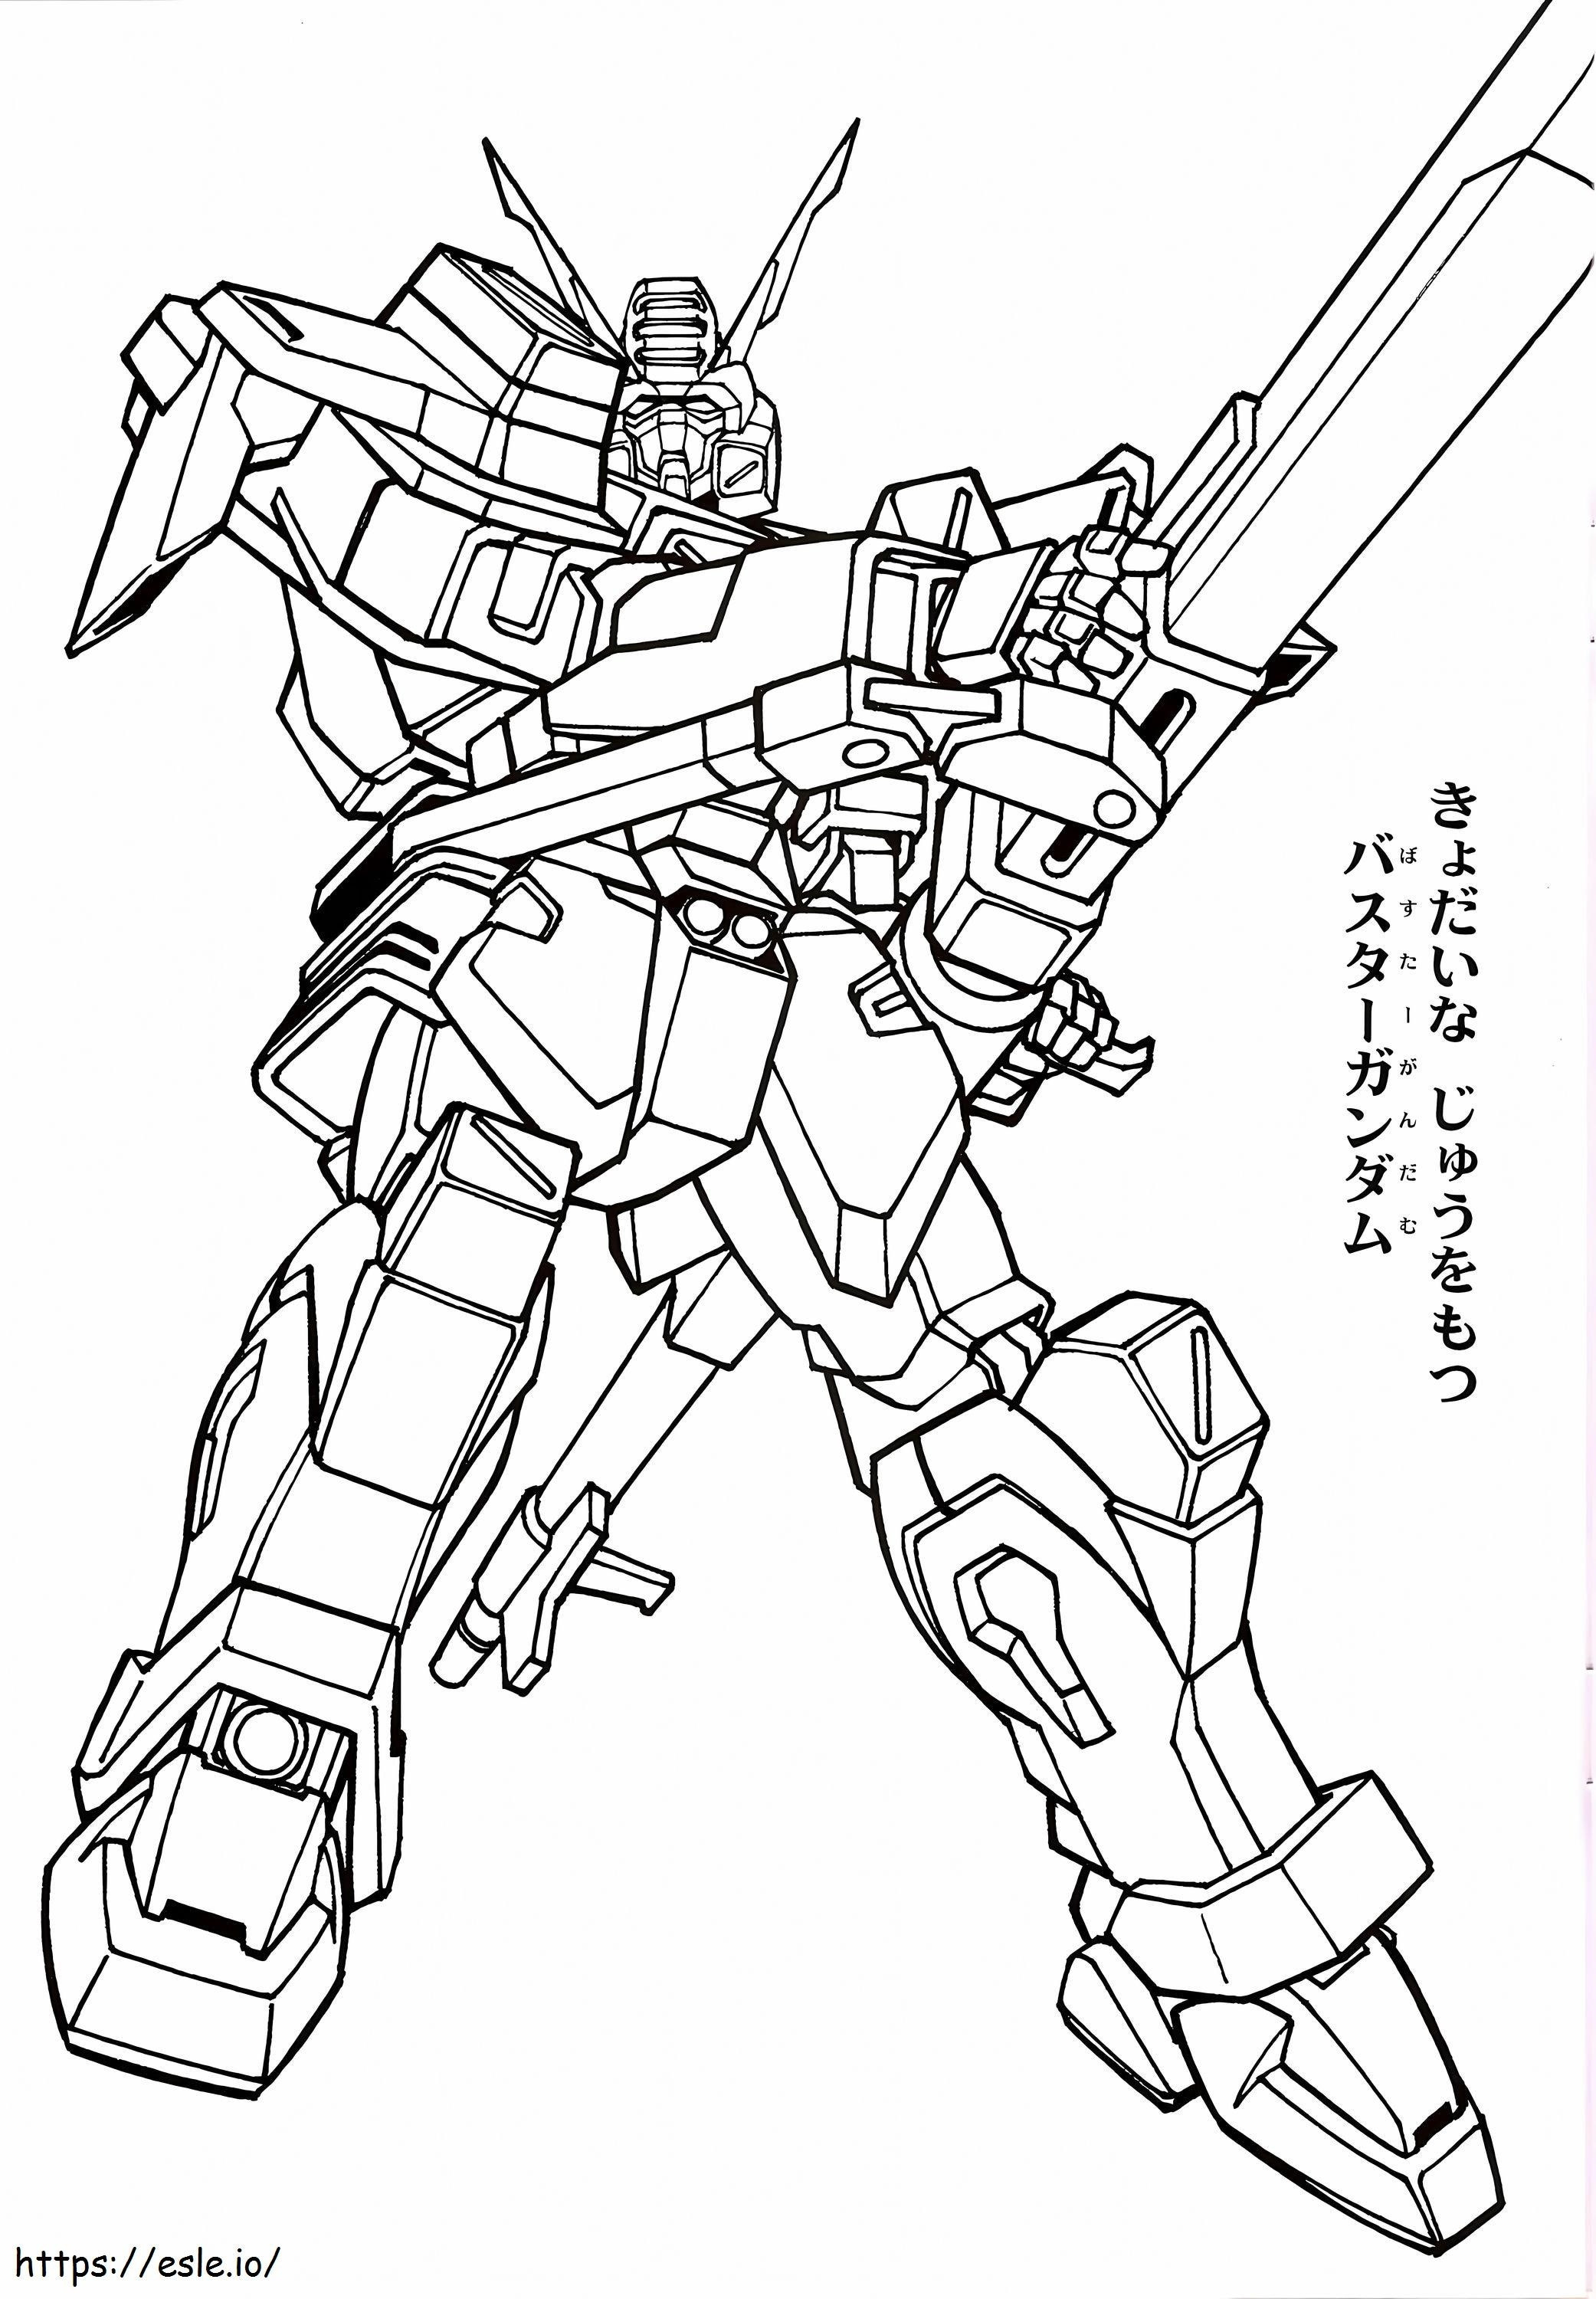 1539420779 Gundam006 coloring page